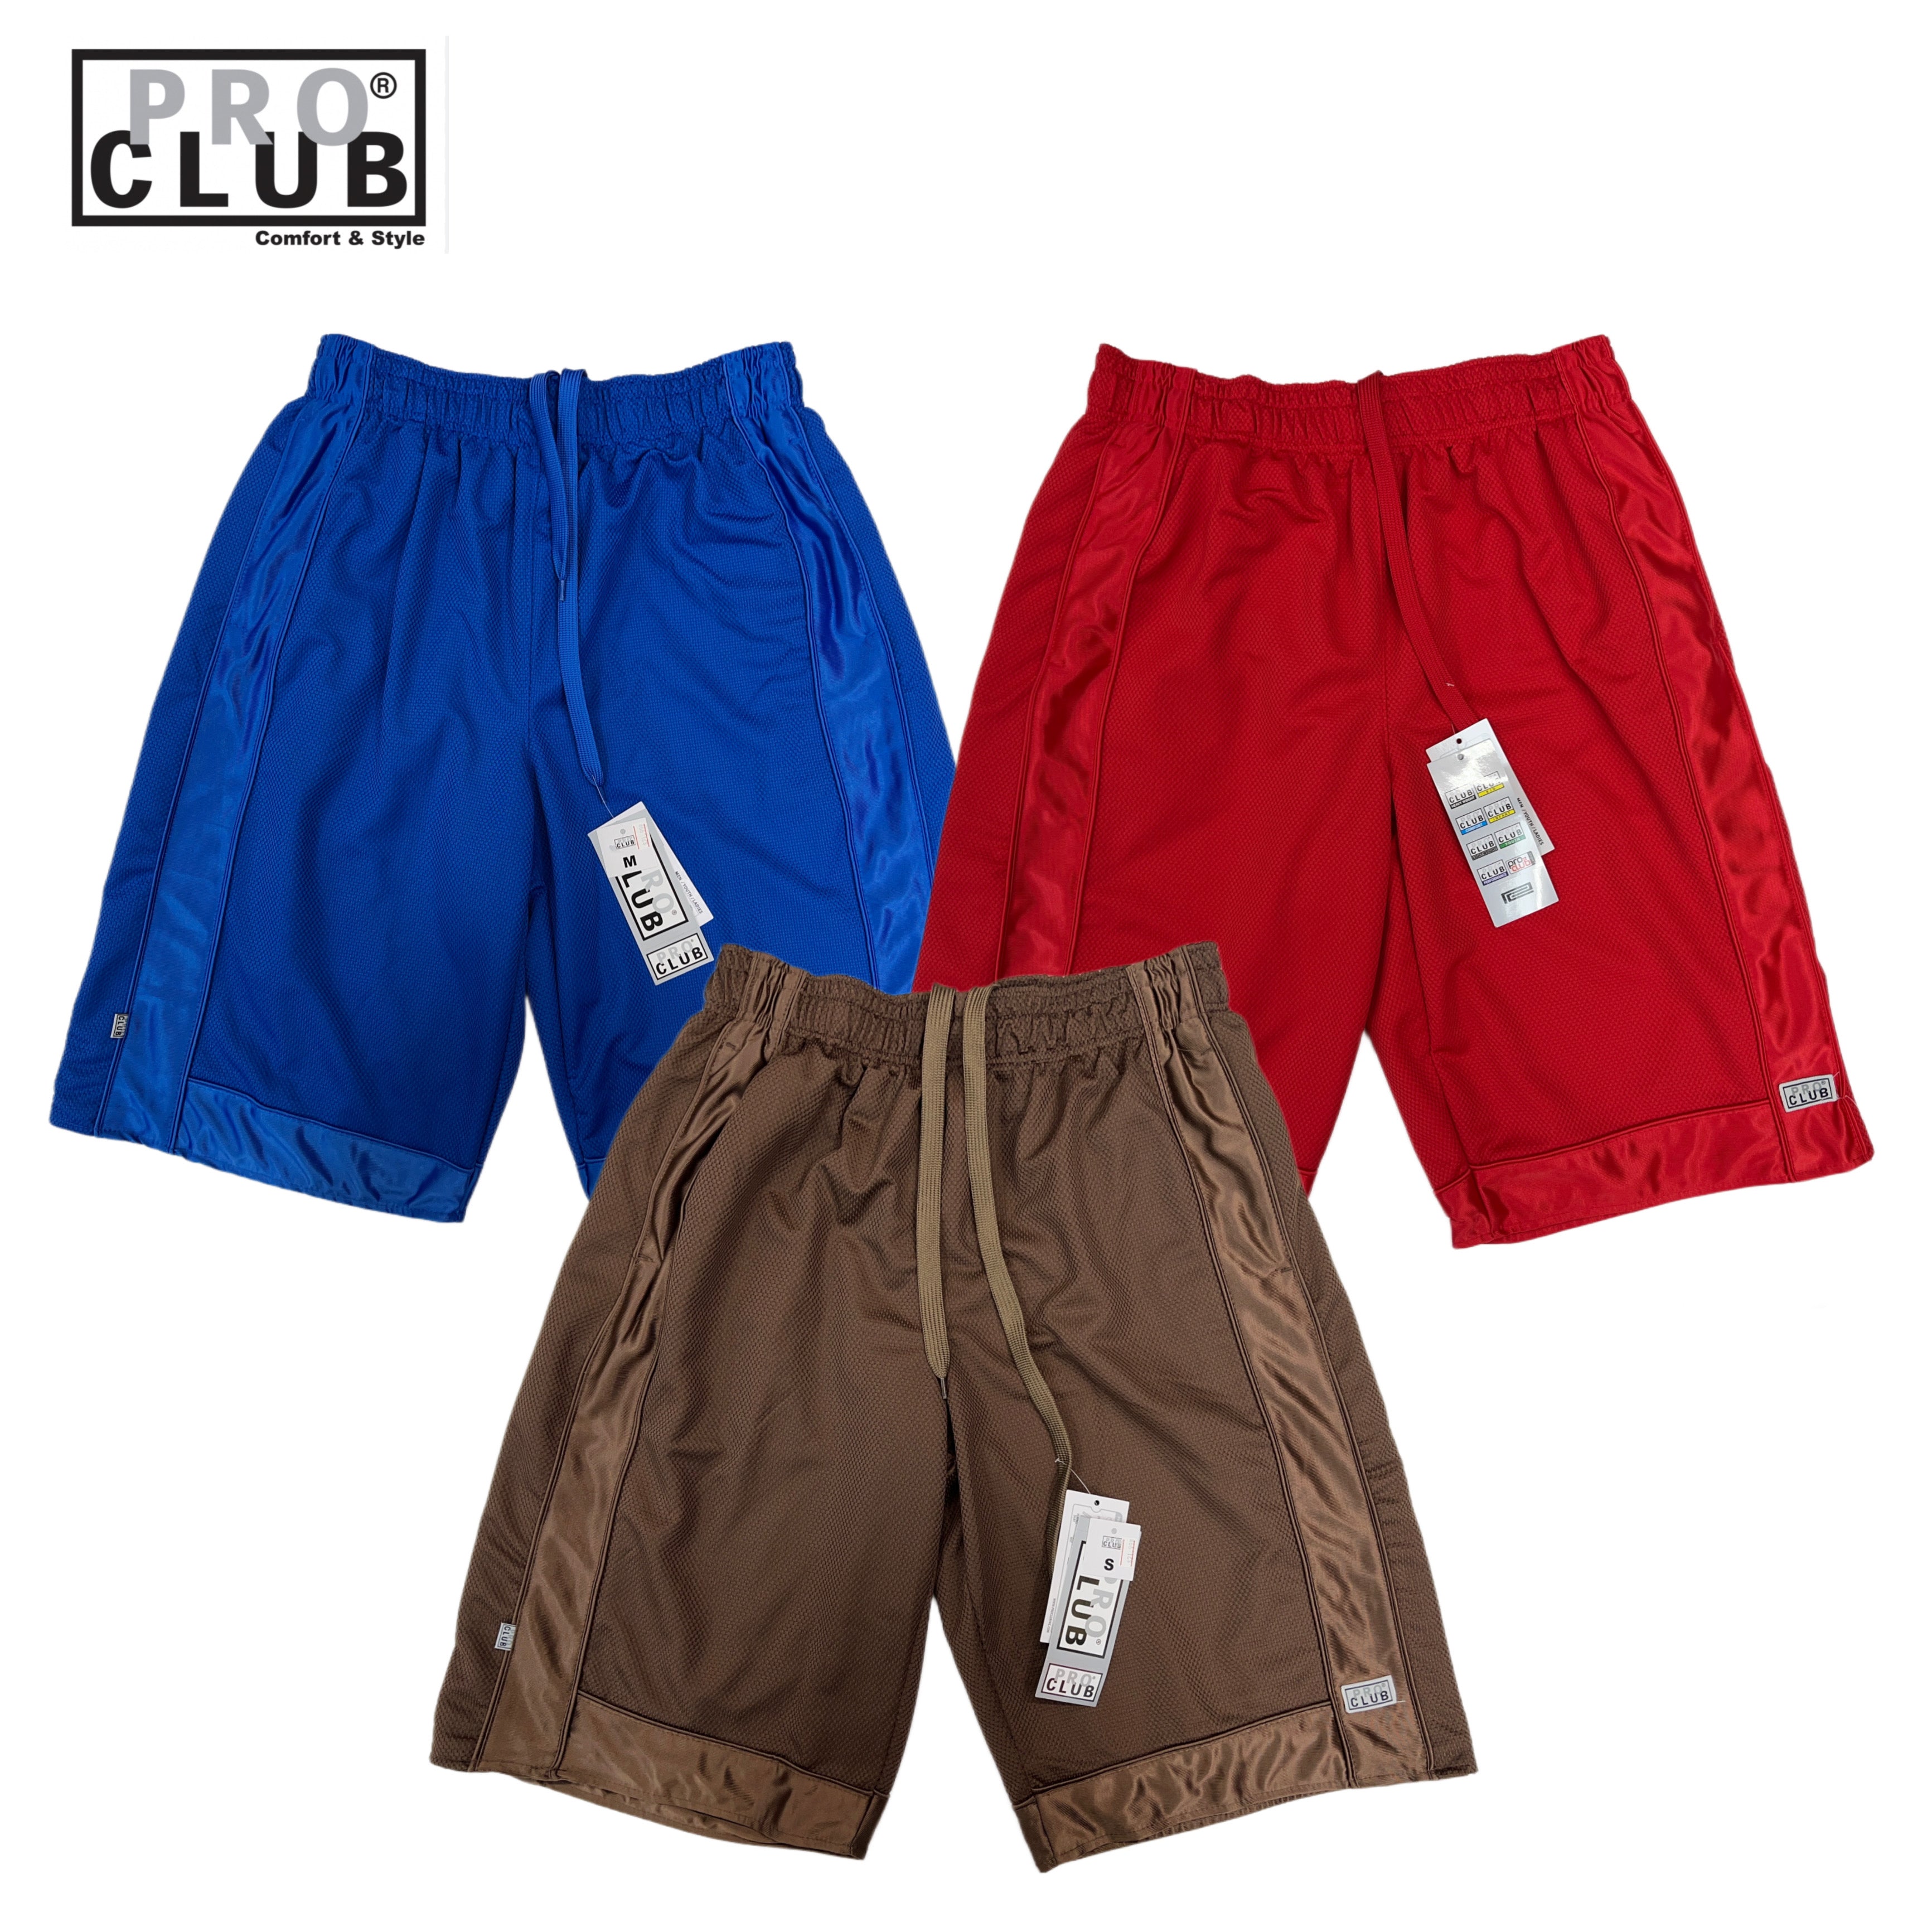 Pro Club Men's Heavyweight Mesh Basketball Shorts (Royal Blue/Red/Brown)